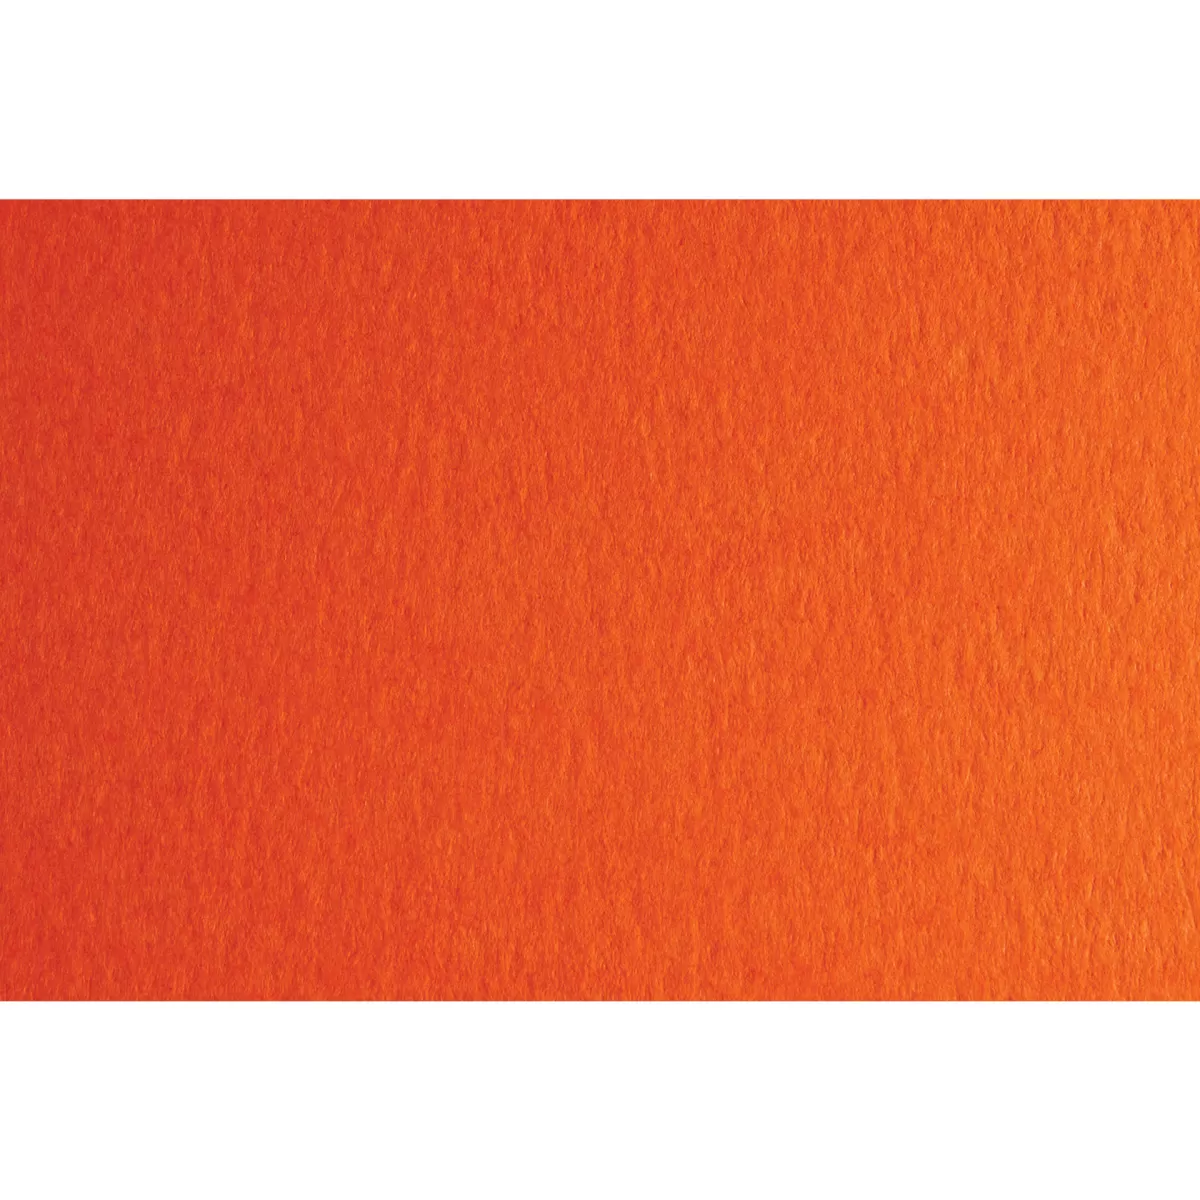 Fabriano Картон Colore, 70 x 100 cm, 200 g/m2, № 246, оранжев